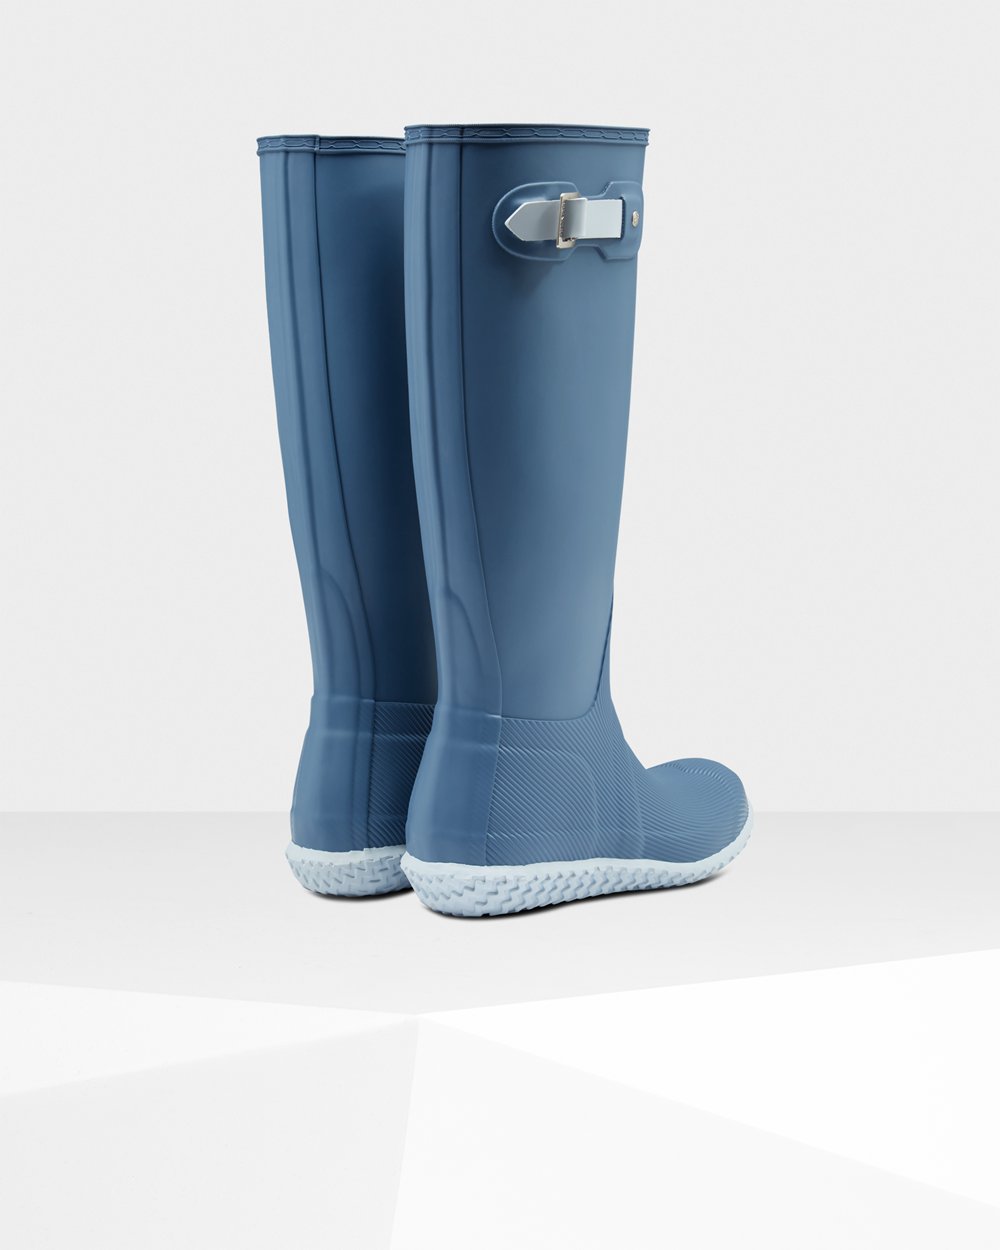 Womens Tall Rain Boots - Hunter Original Flat Heel Calendar Sole (36BNDLJAR) - Blue/Grey